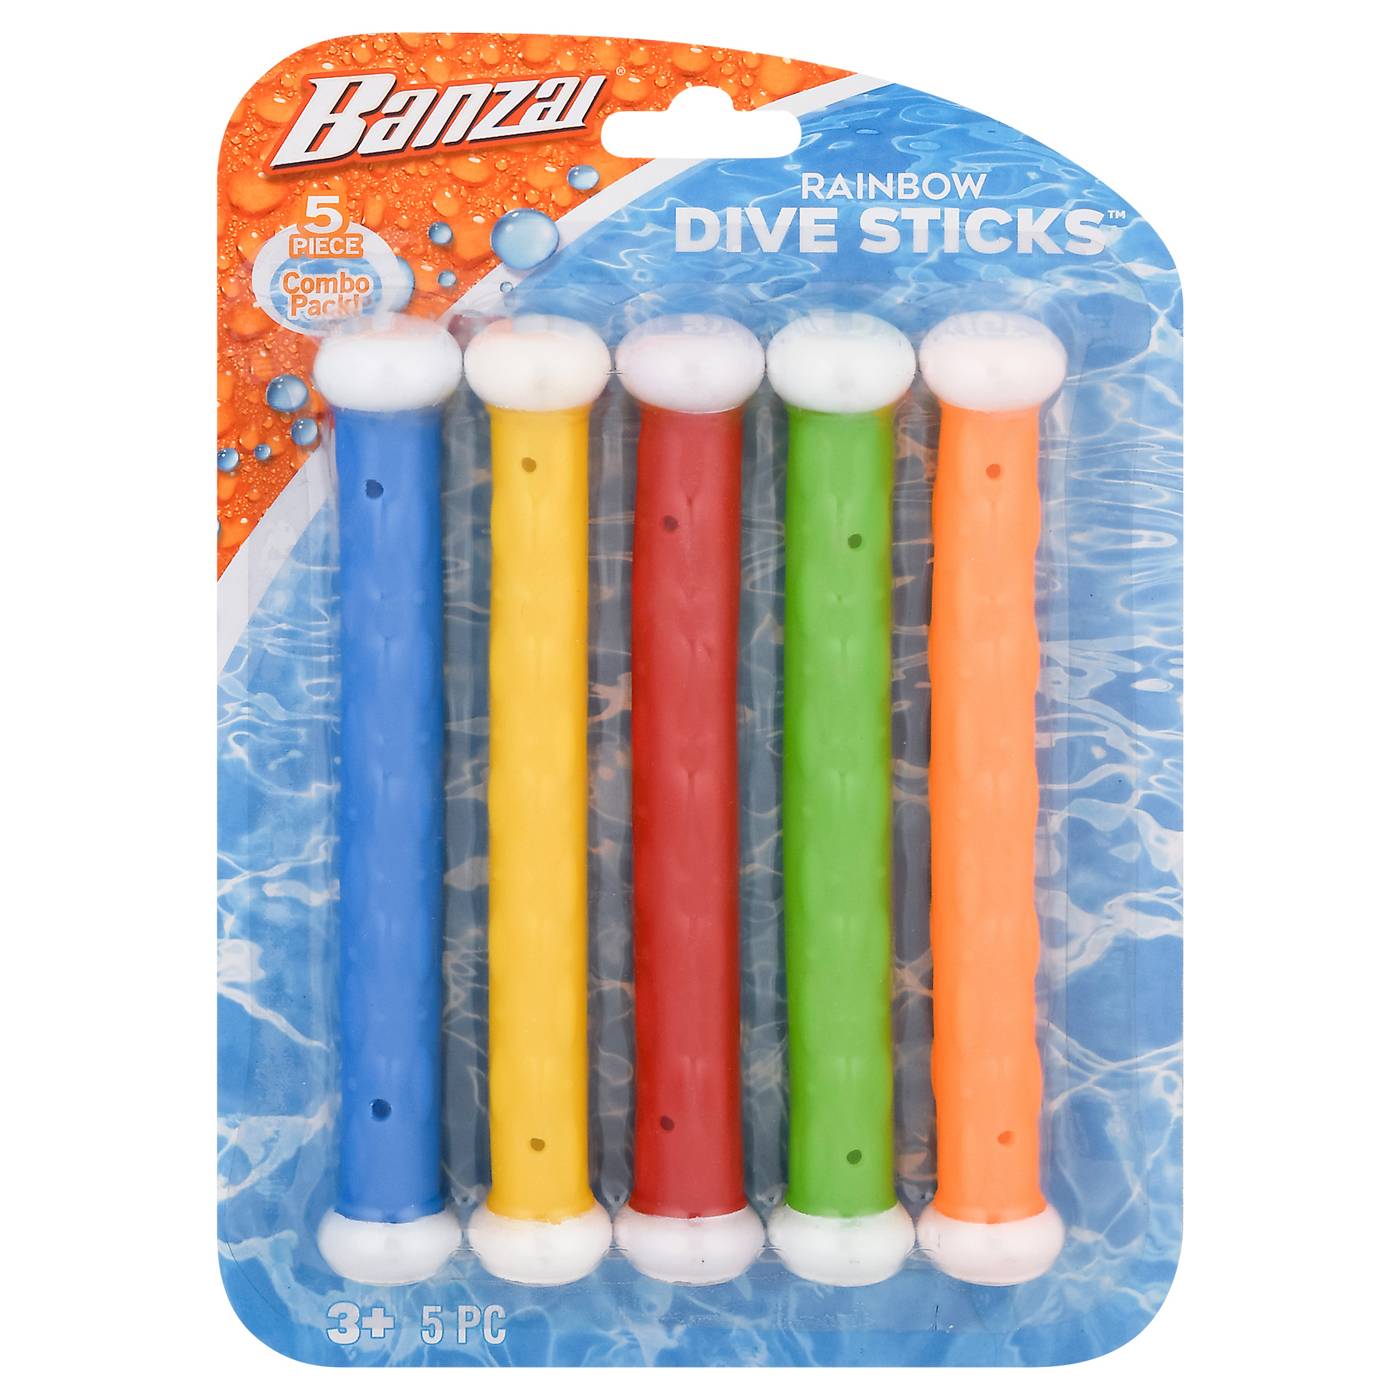 Banzai Rainbow Dive Sticks; image 1 of 4